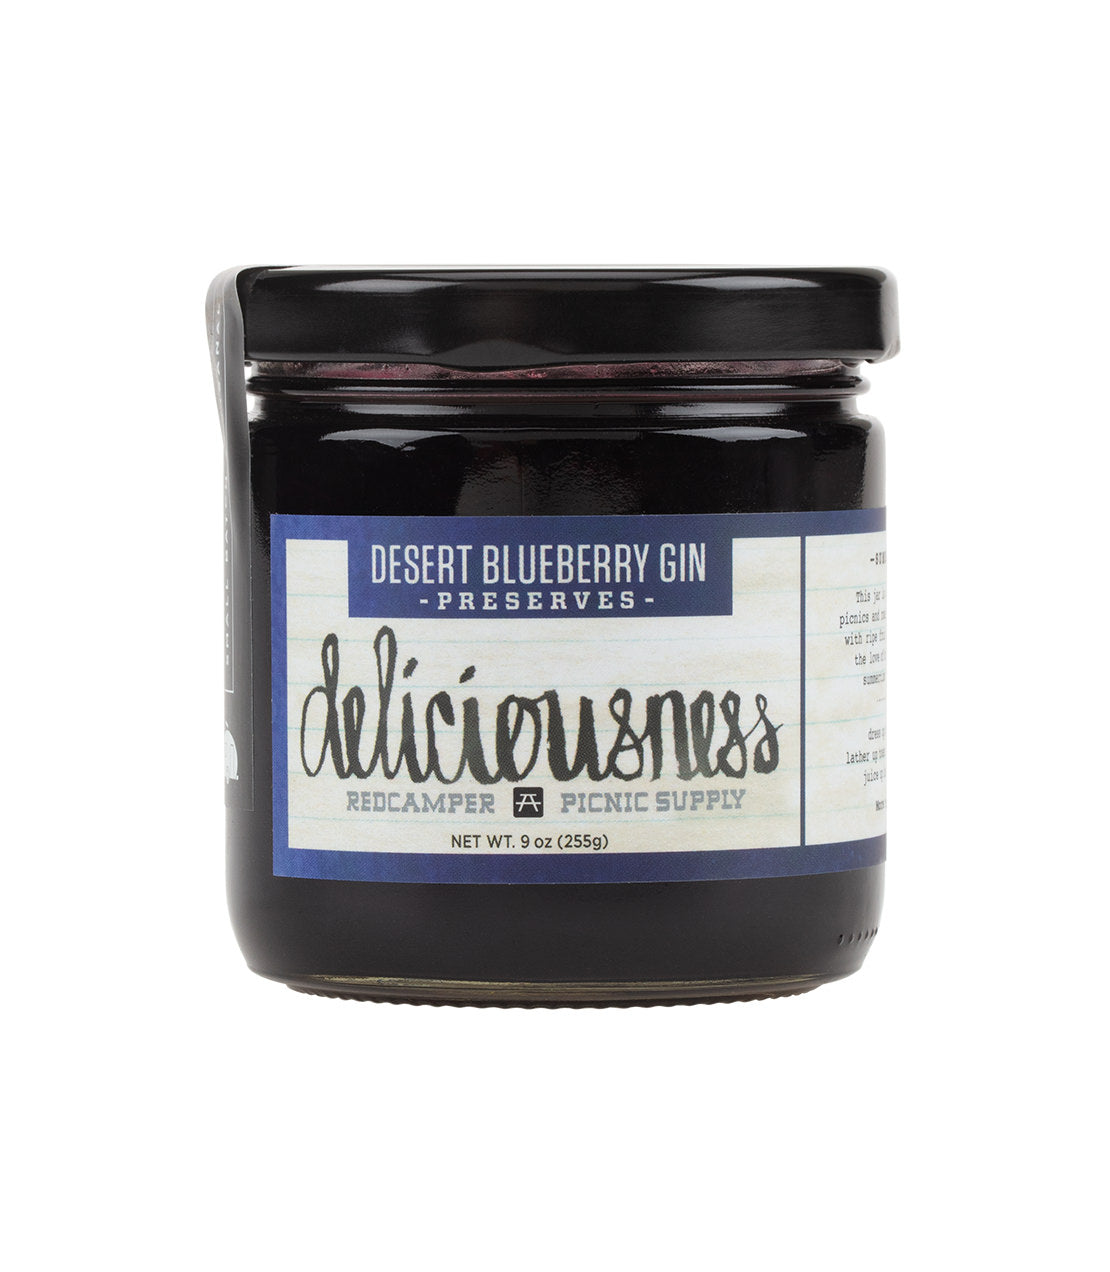 Redcamper Preserves (Assorted Flavors) - 9 oz. Jar Desert Blueberry Gin - Harney & Sons Fine Teas